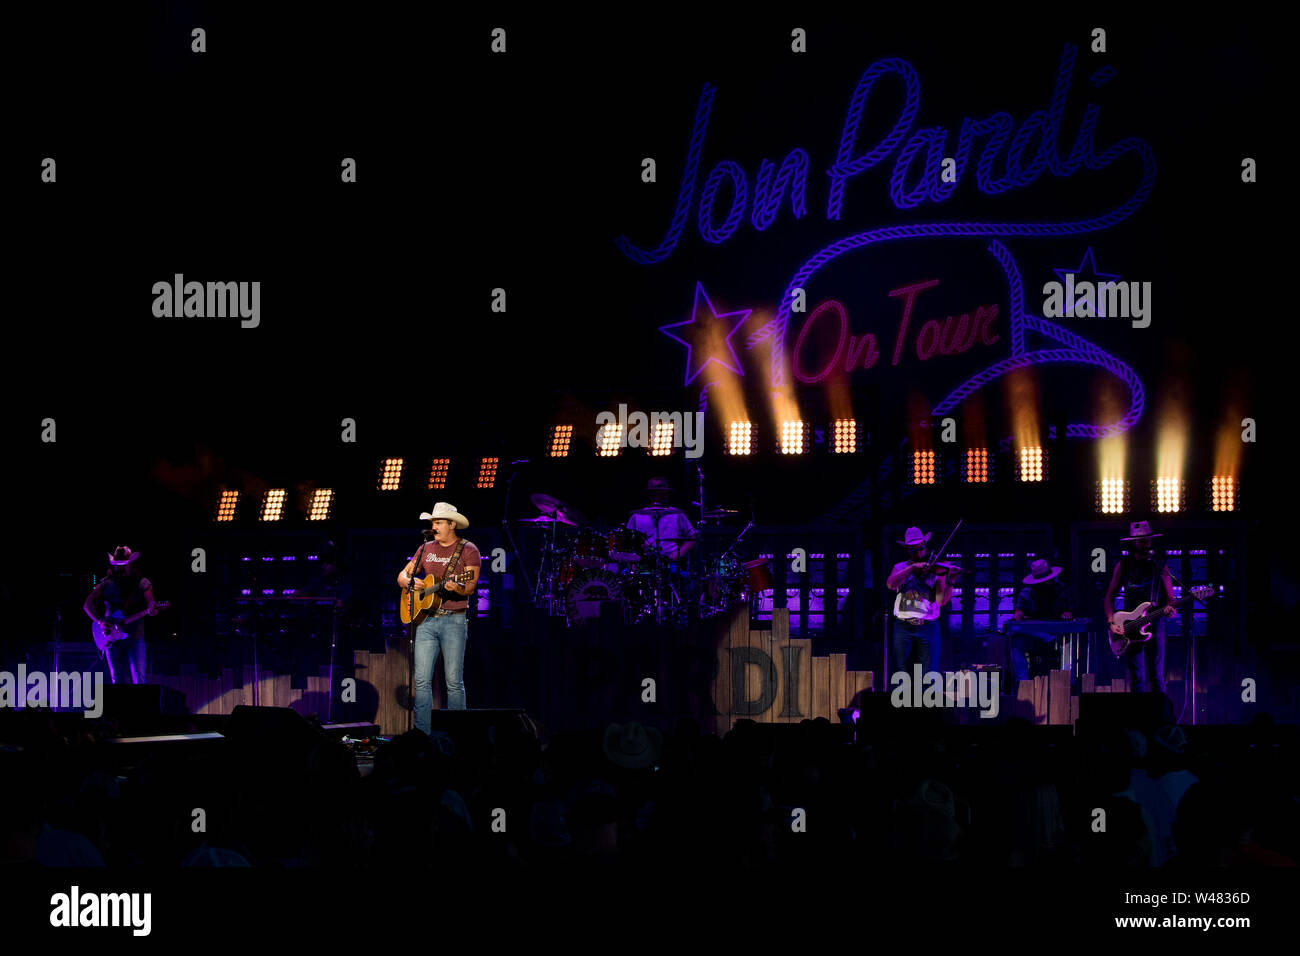 Pressroom  JON PARDI'S VIDEO FOR HIS LATEST SONG, “NIGHT SHIFT